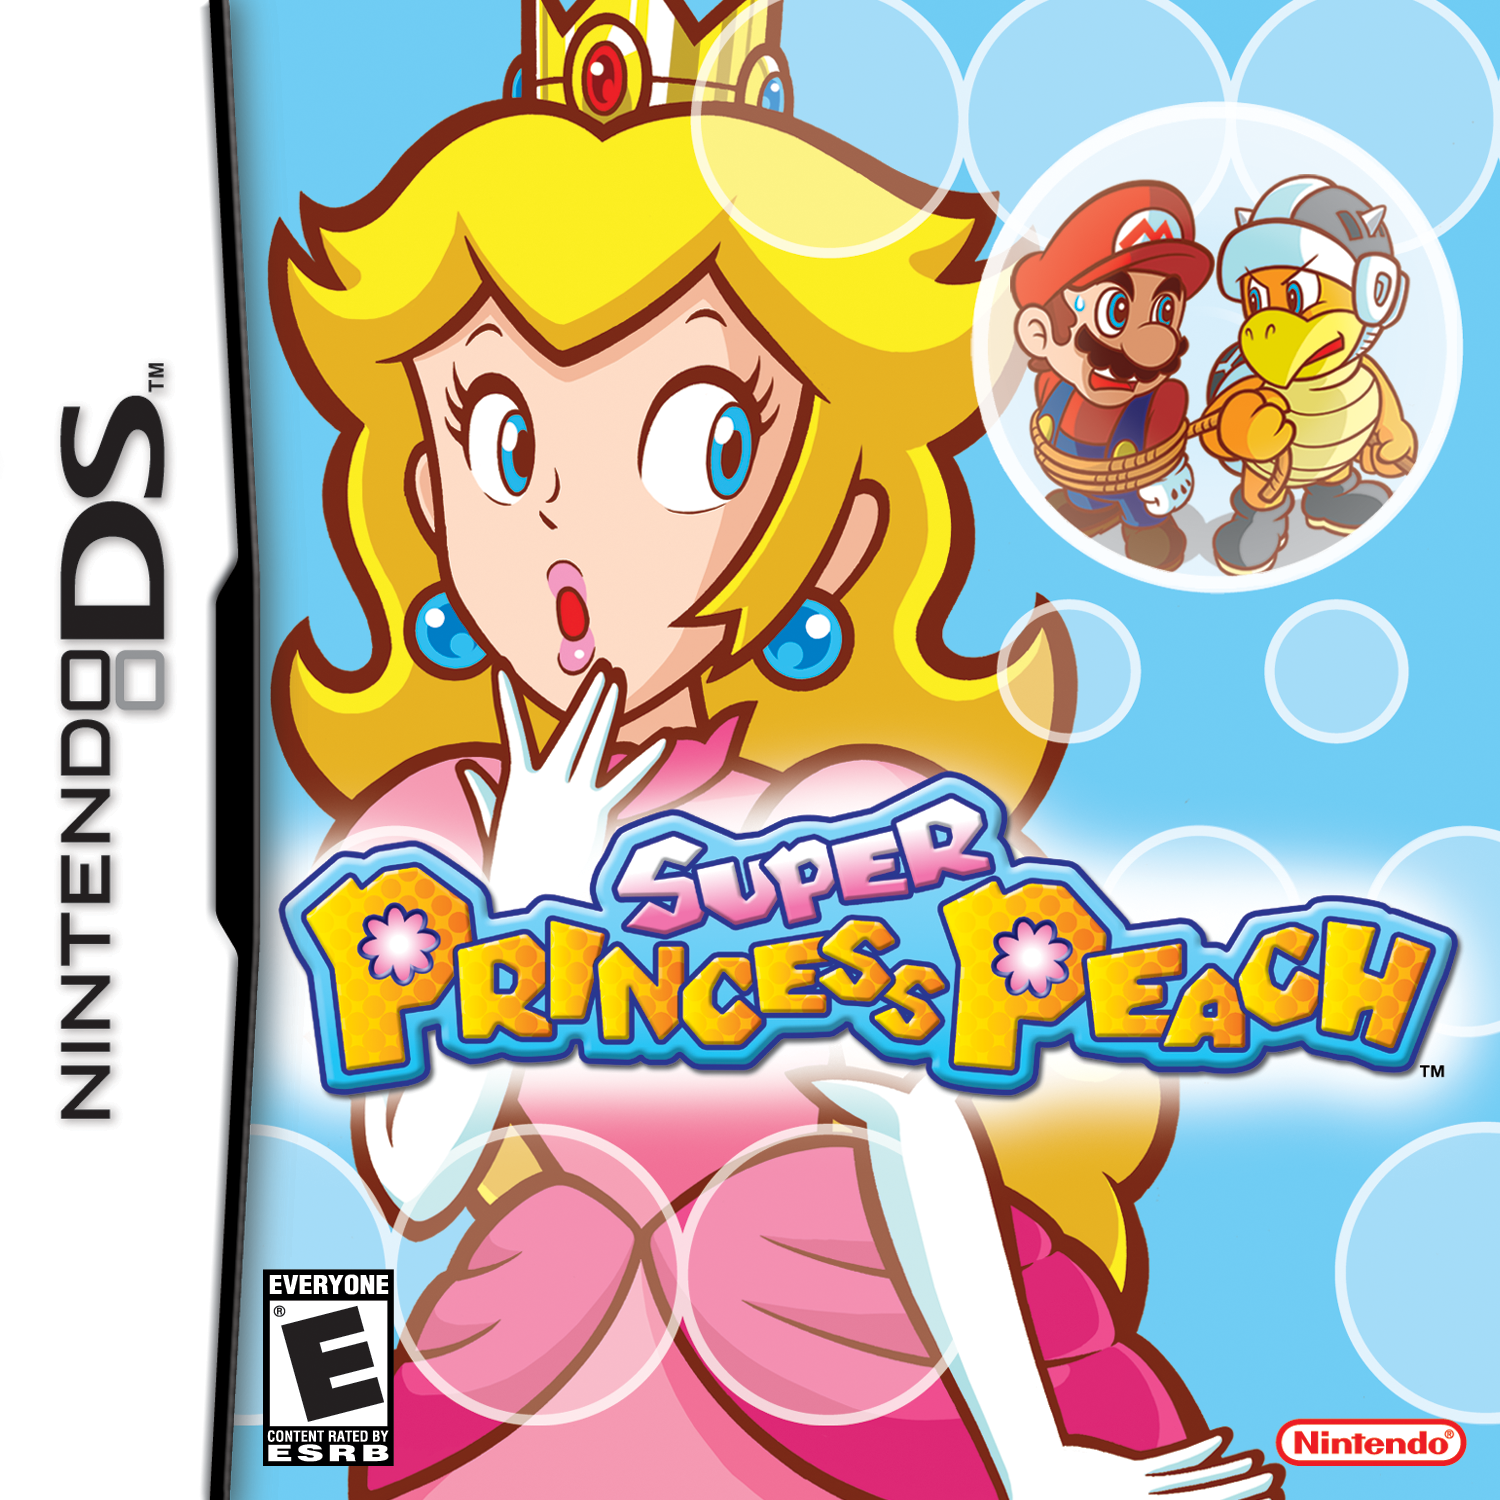 Super_Princess_Peach_box_art.png